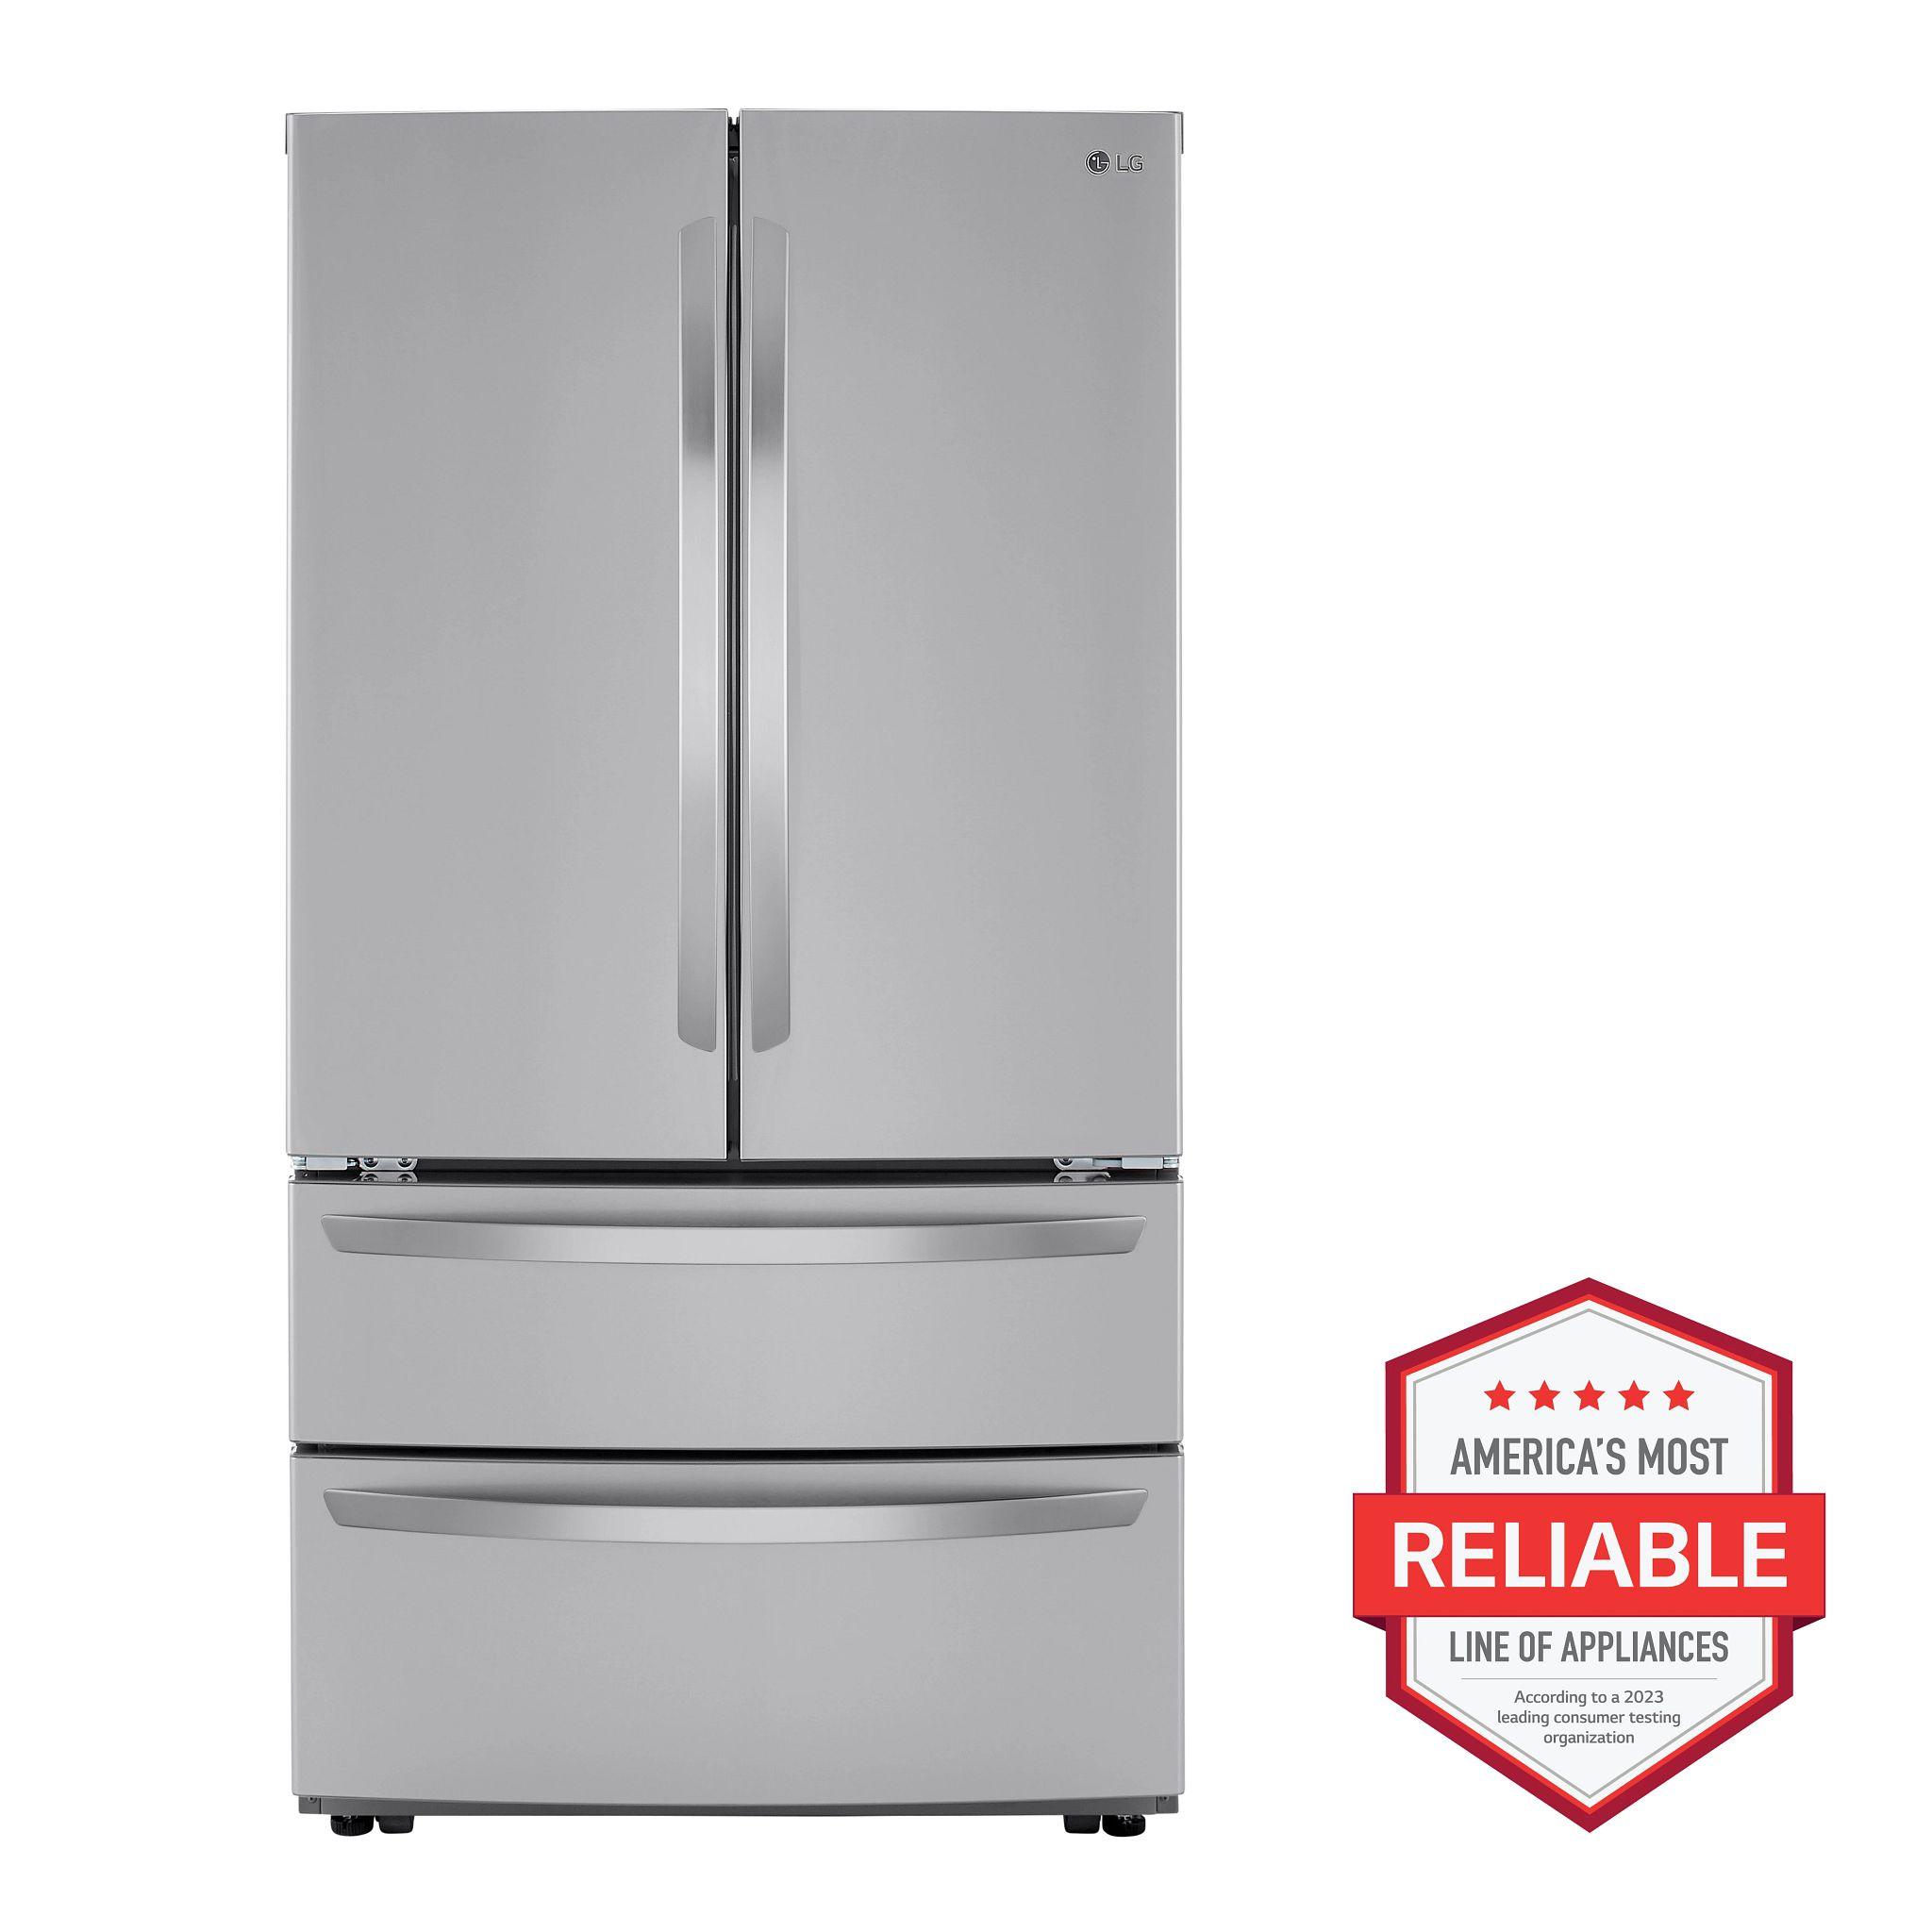 LG Appliances 23 cu. ft. French Door Counter-Depth Refrigerator